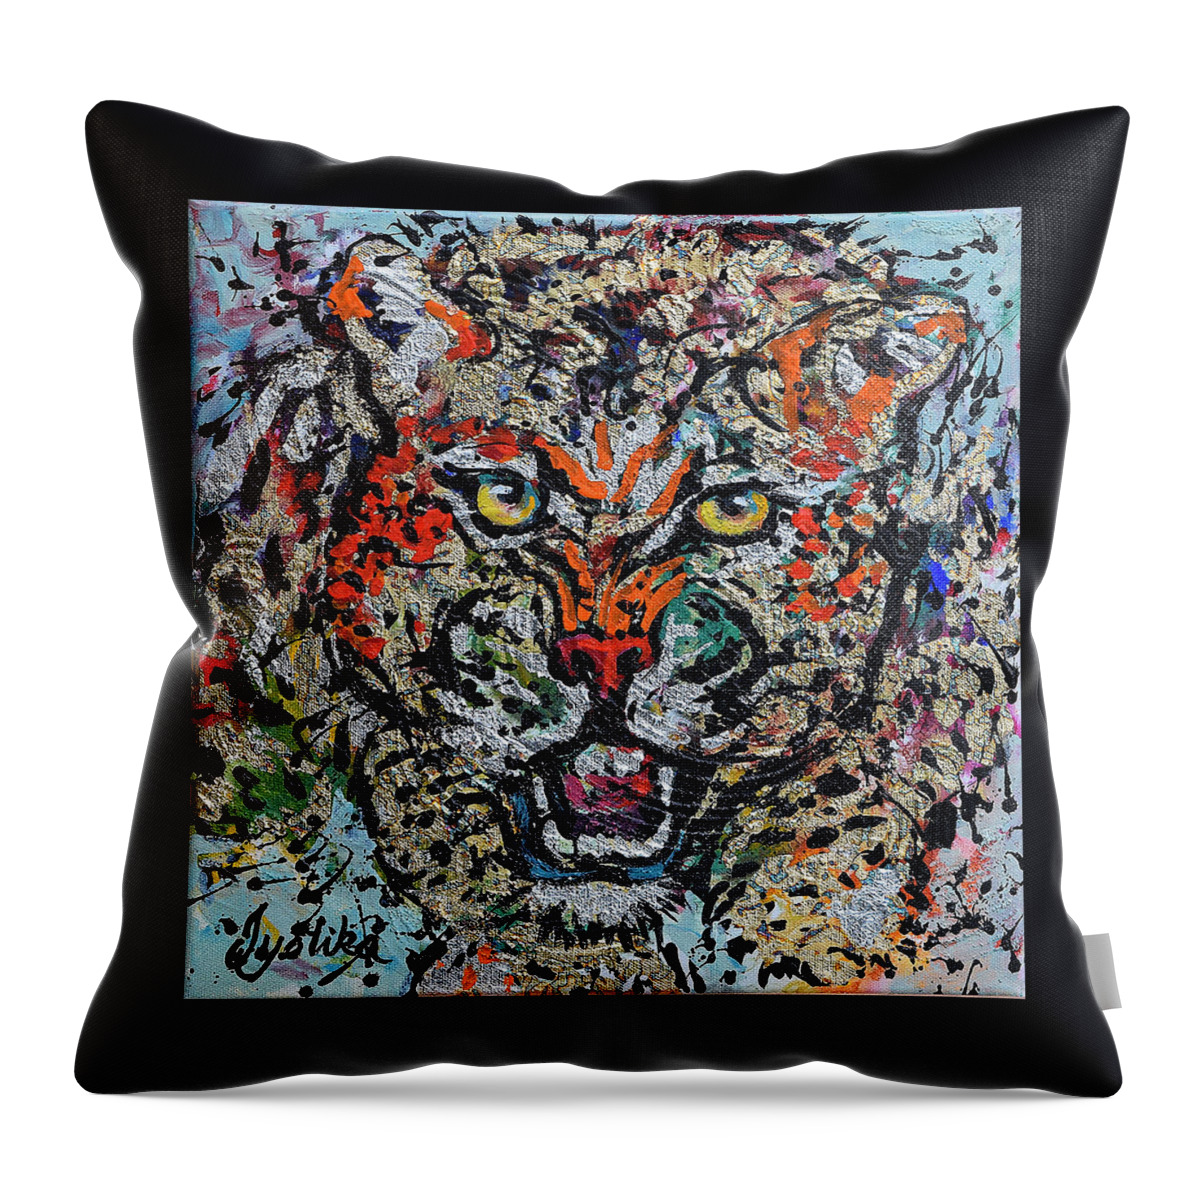 Cheetah Throw Pillow featuring the painting Cheetah Attack by Jyotika Shroff